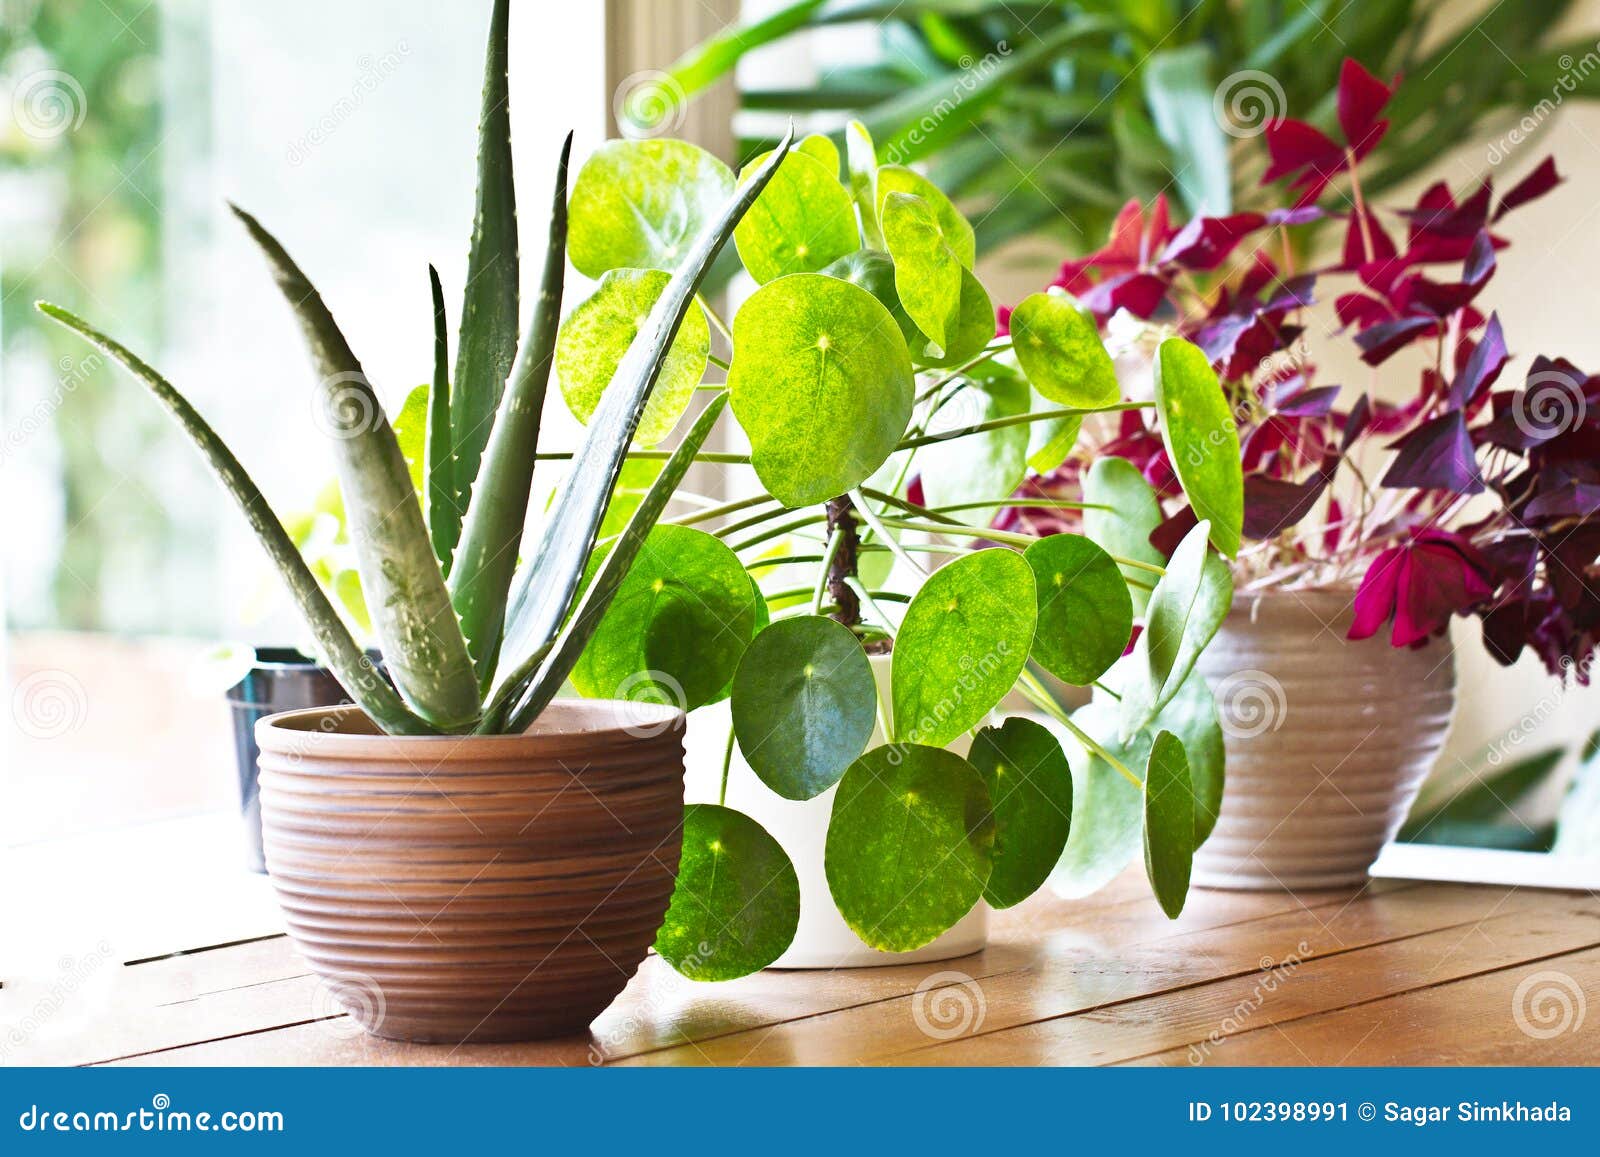 houseplants display. various house plants or indoor plants